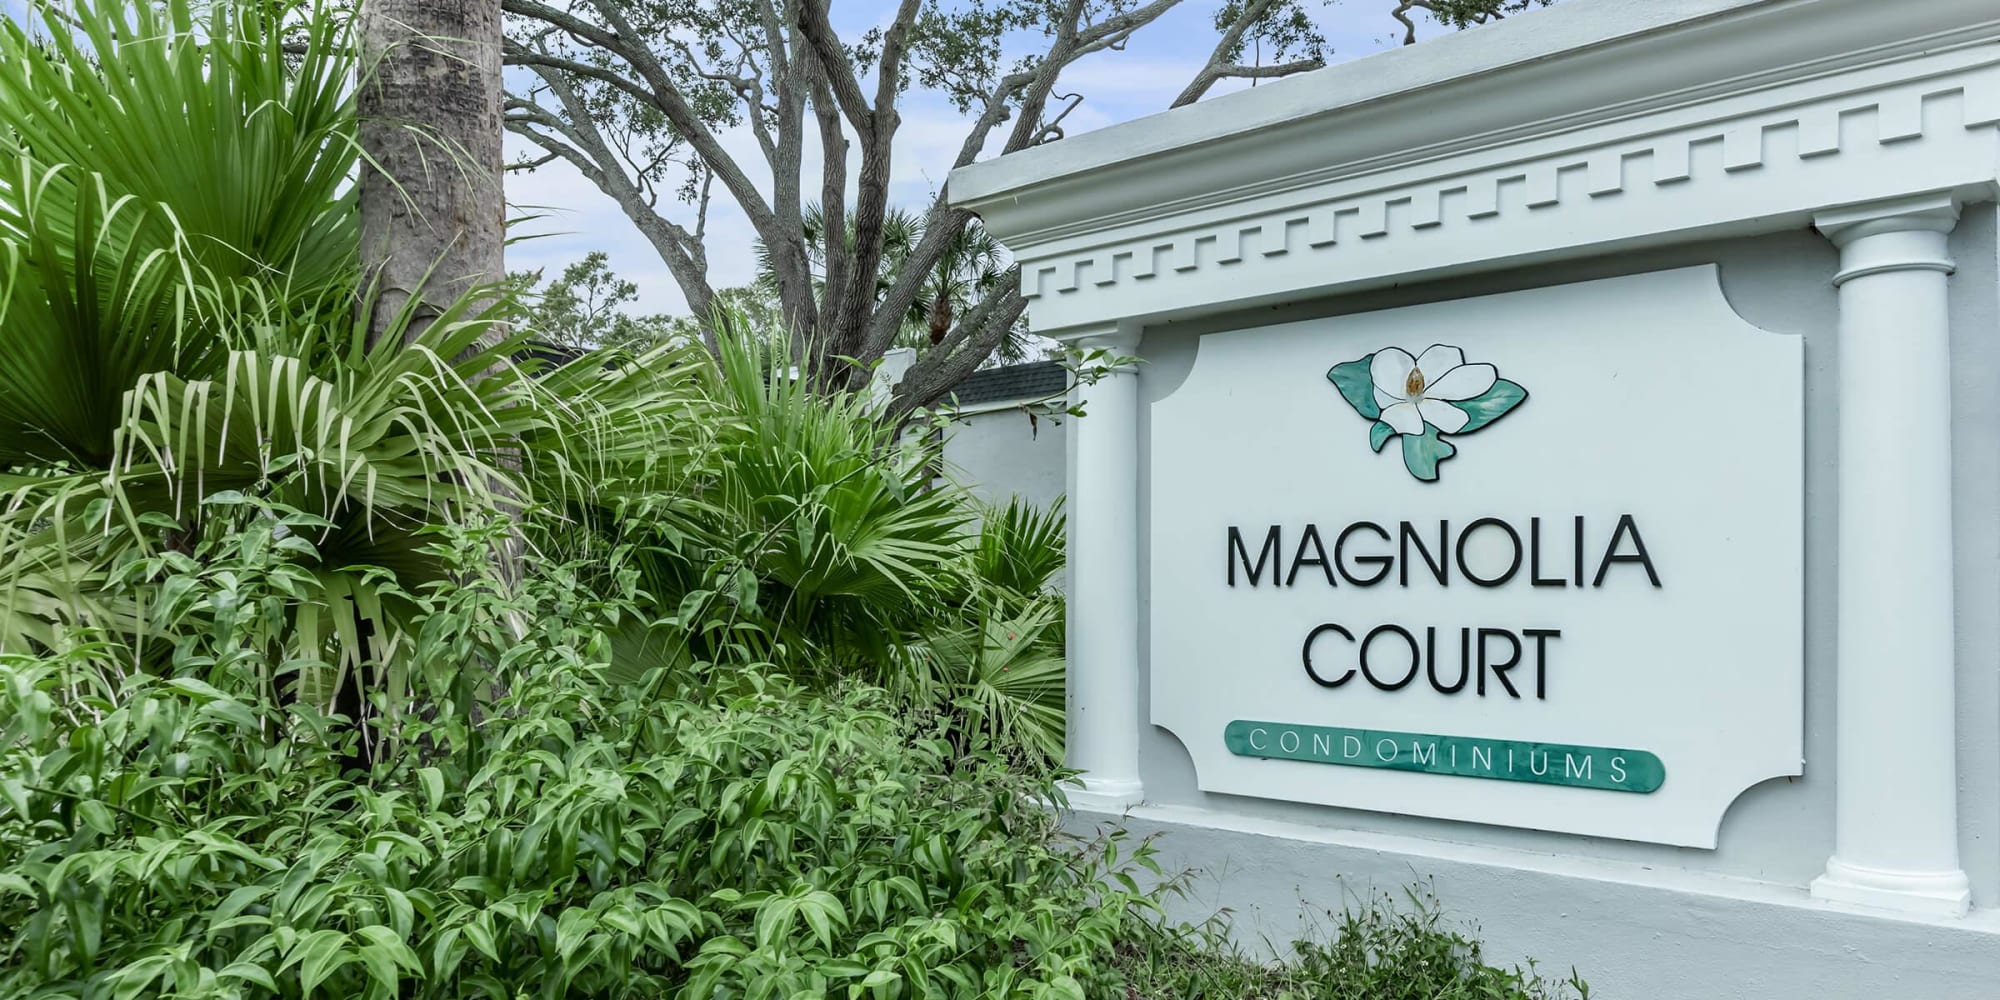 Entrance sign at Magnolia Court in Orlando, Florida